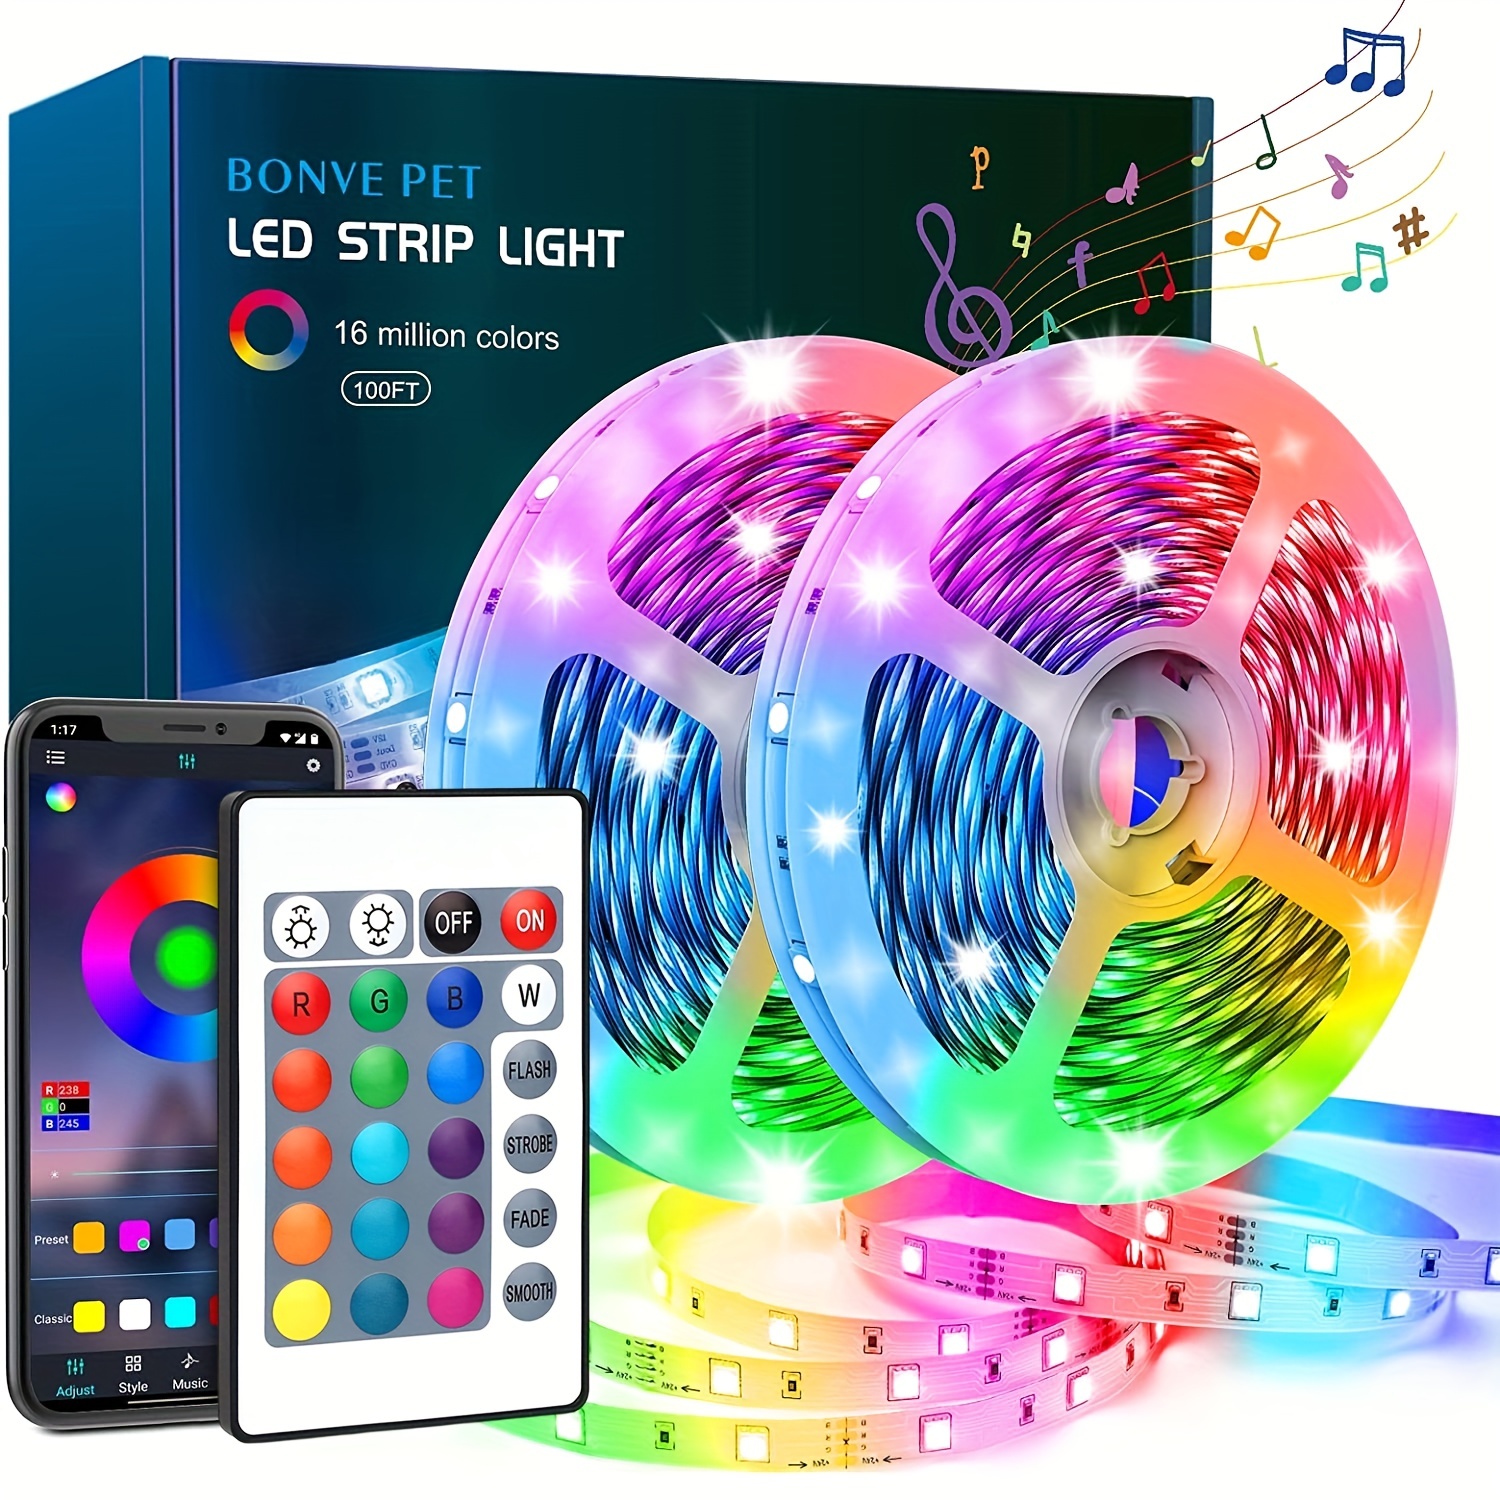 Bonve Pet LED Strips Light 10M, Bluetooth RGB LED Germany